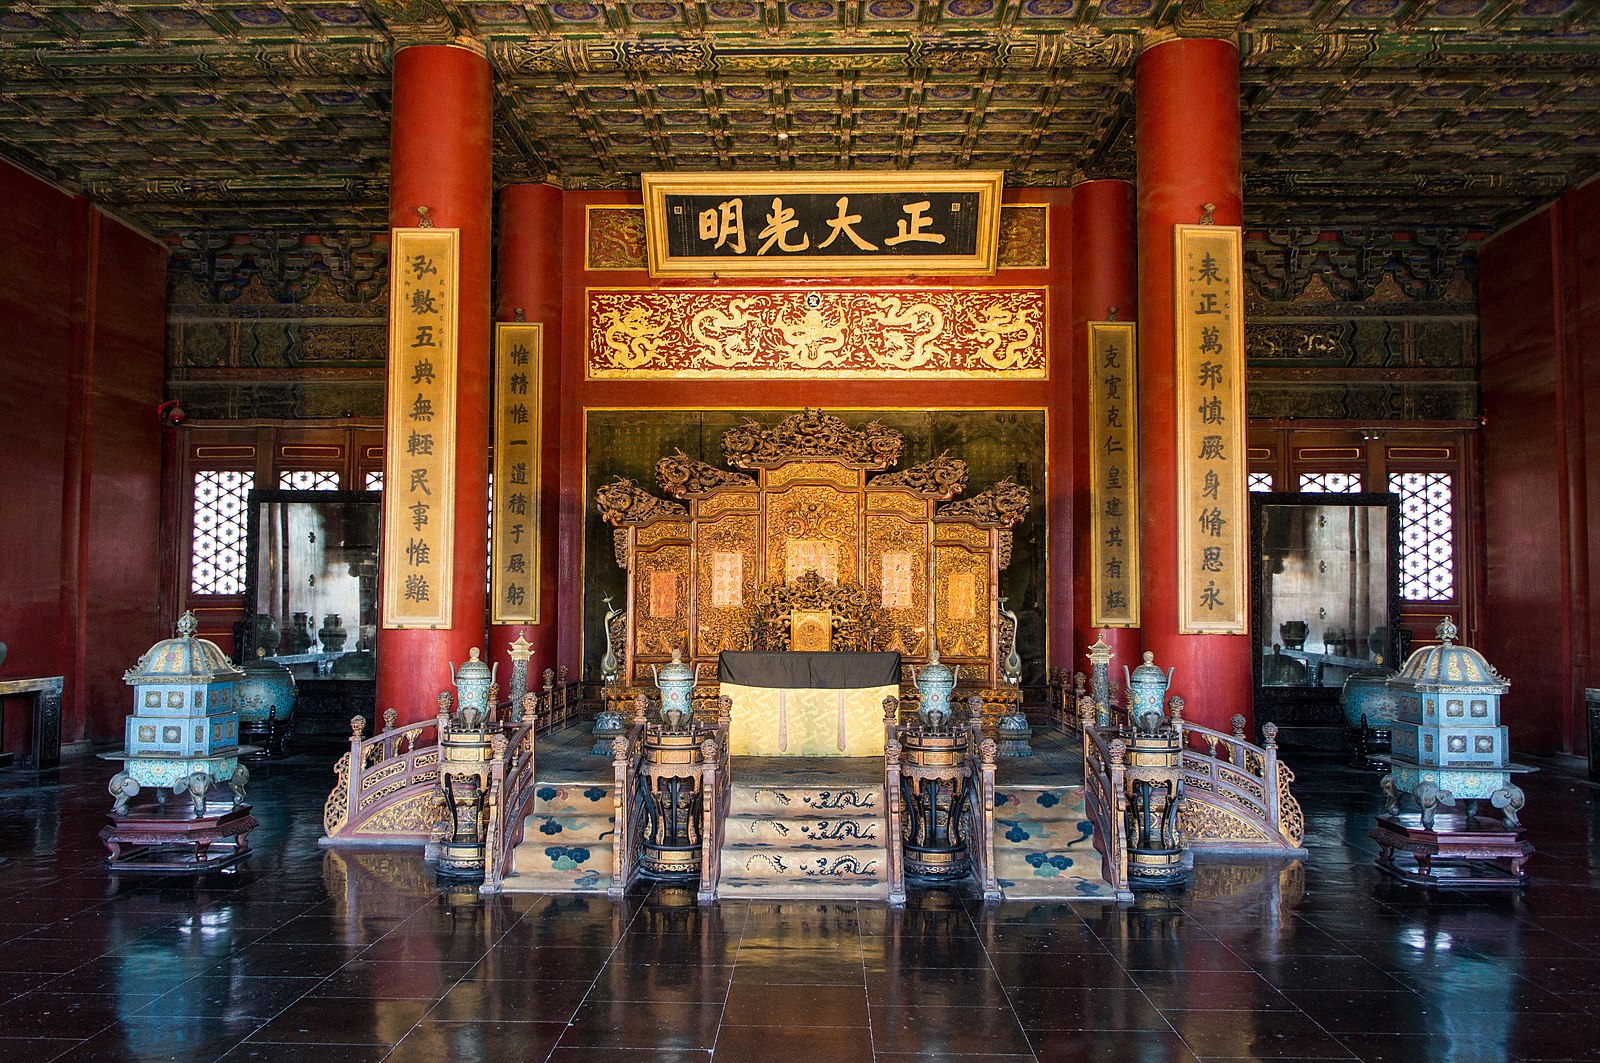 Dragon_Throne_Palace_of_Heavenly_Purity_Forbidden_City_Beijing.jpg